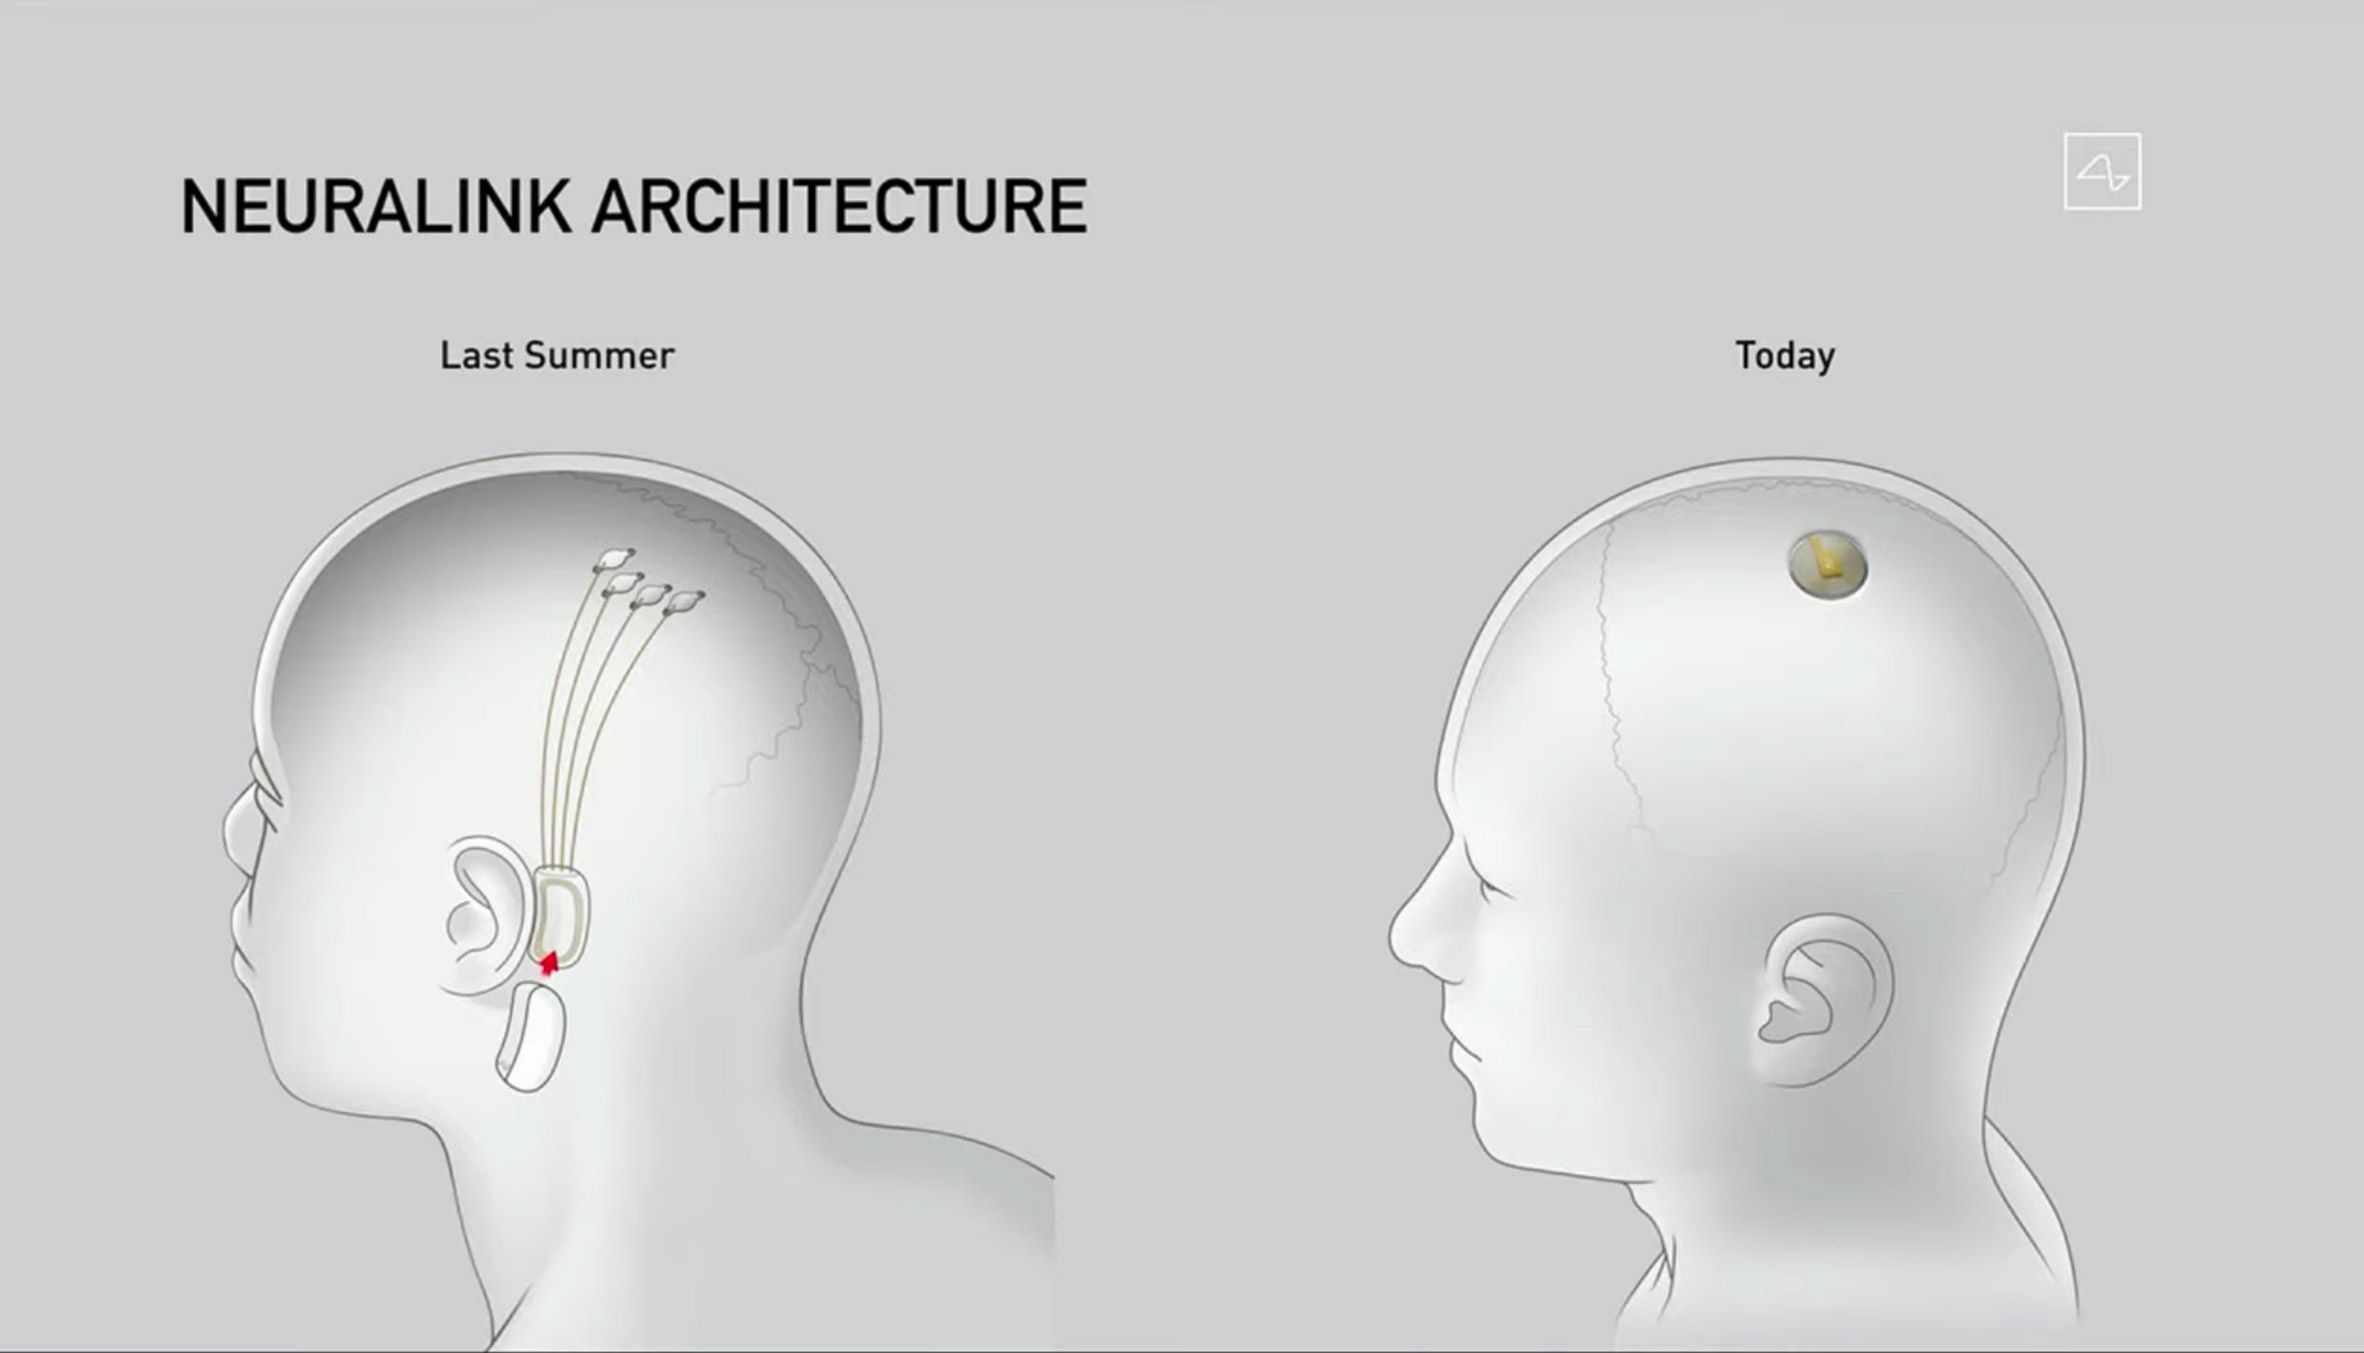 Elon Musk unveils new Neuralink brain implant design and robot that inserts it